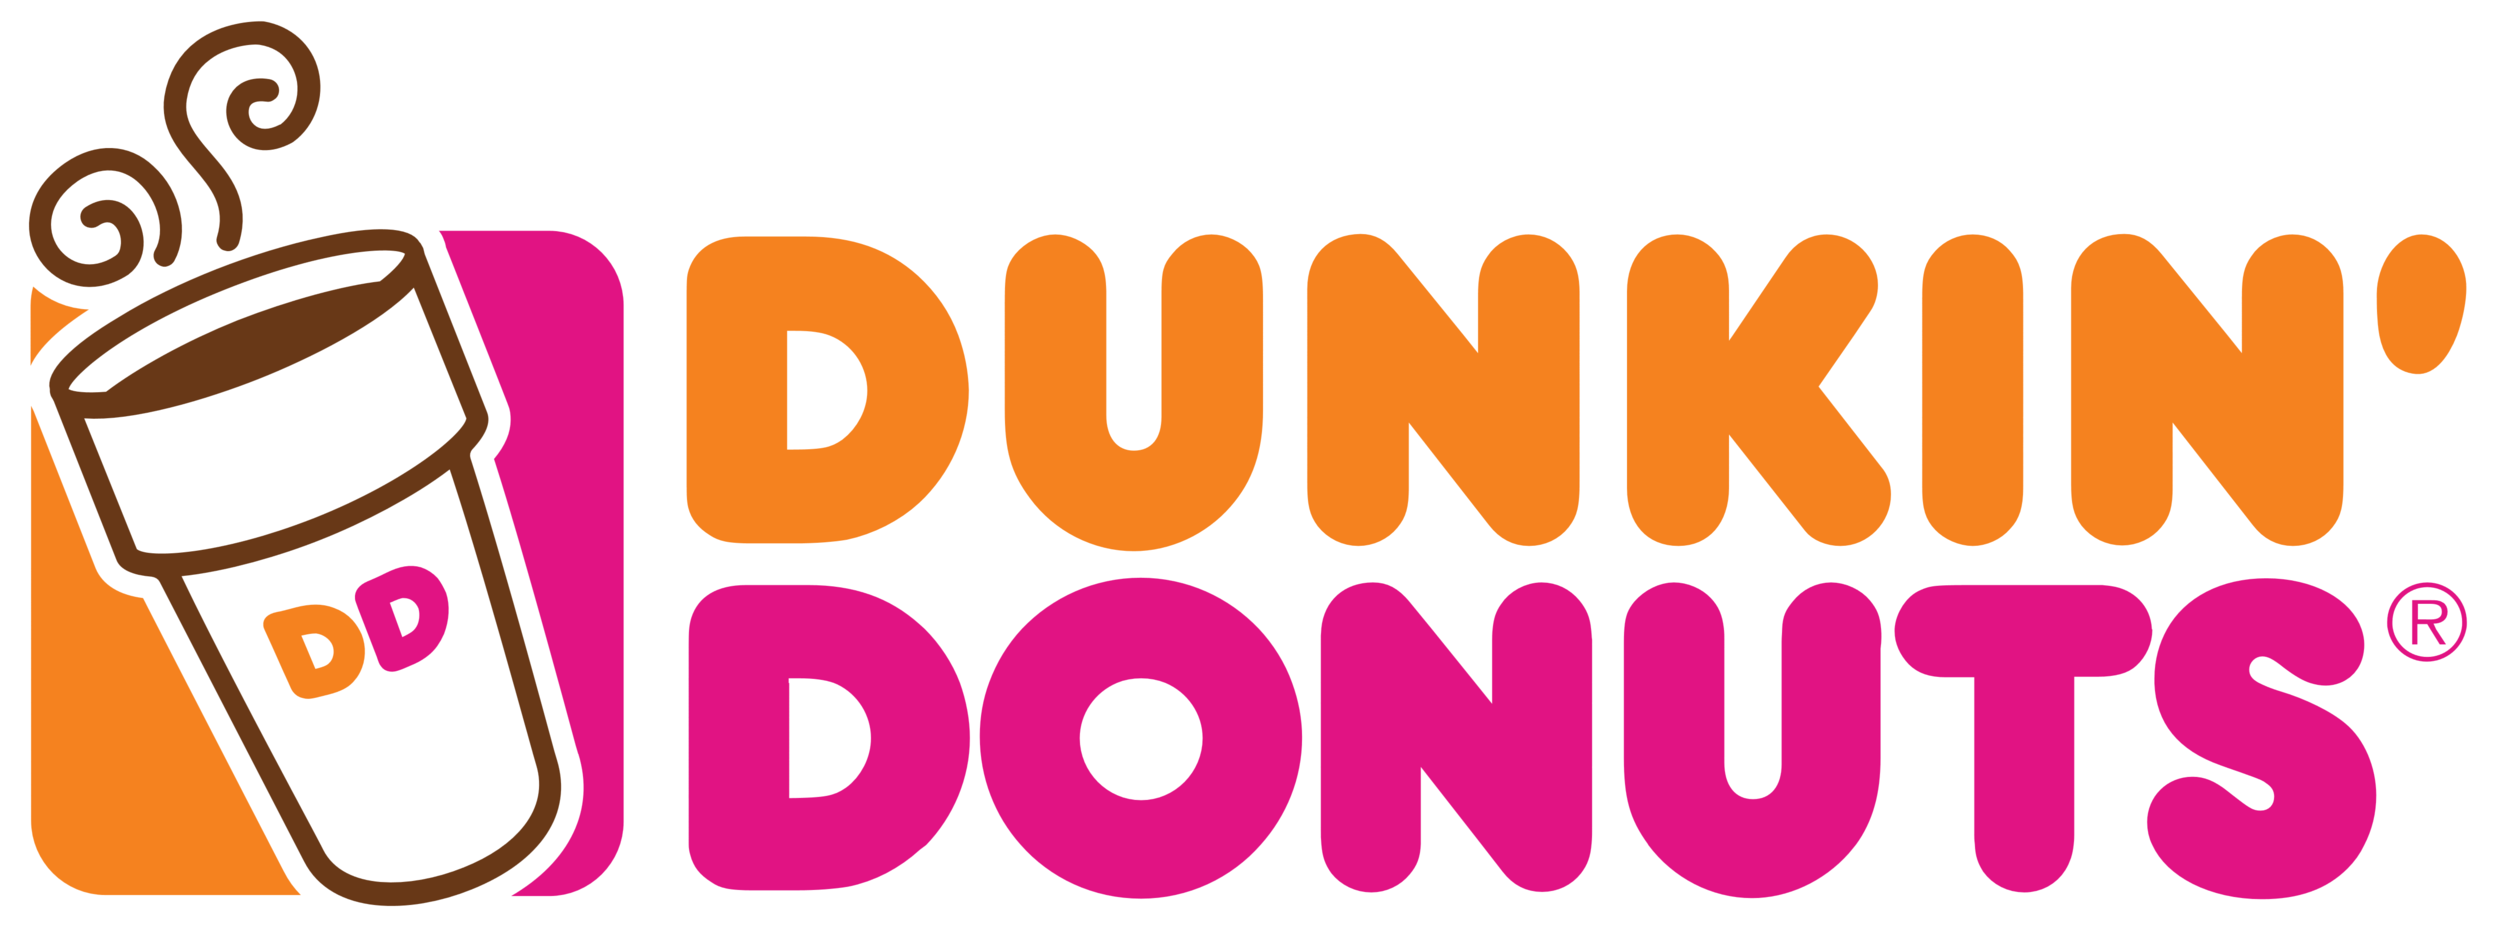 Dunkin_Donuts_logo_logotype.png